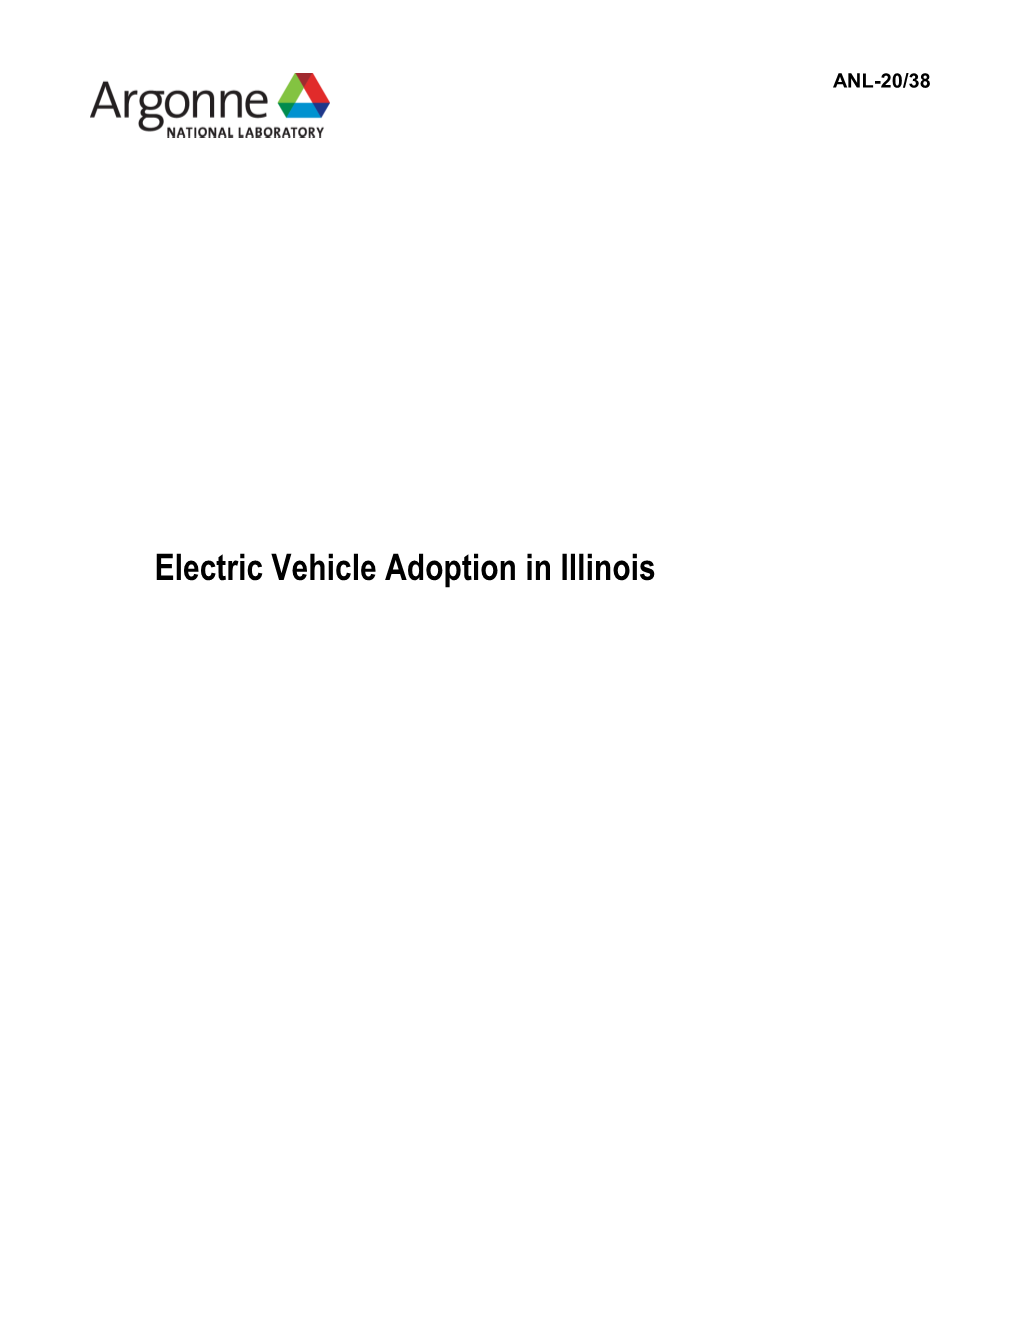 Electric Vehicle Adoption in Illinois